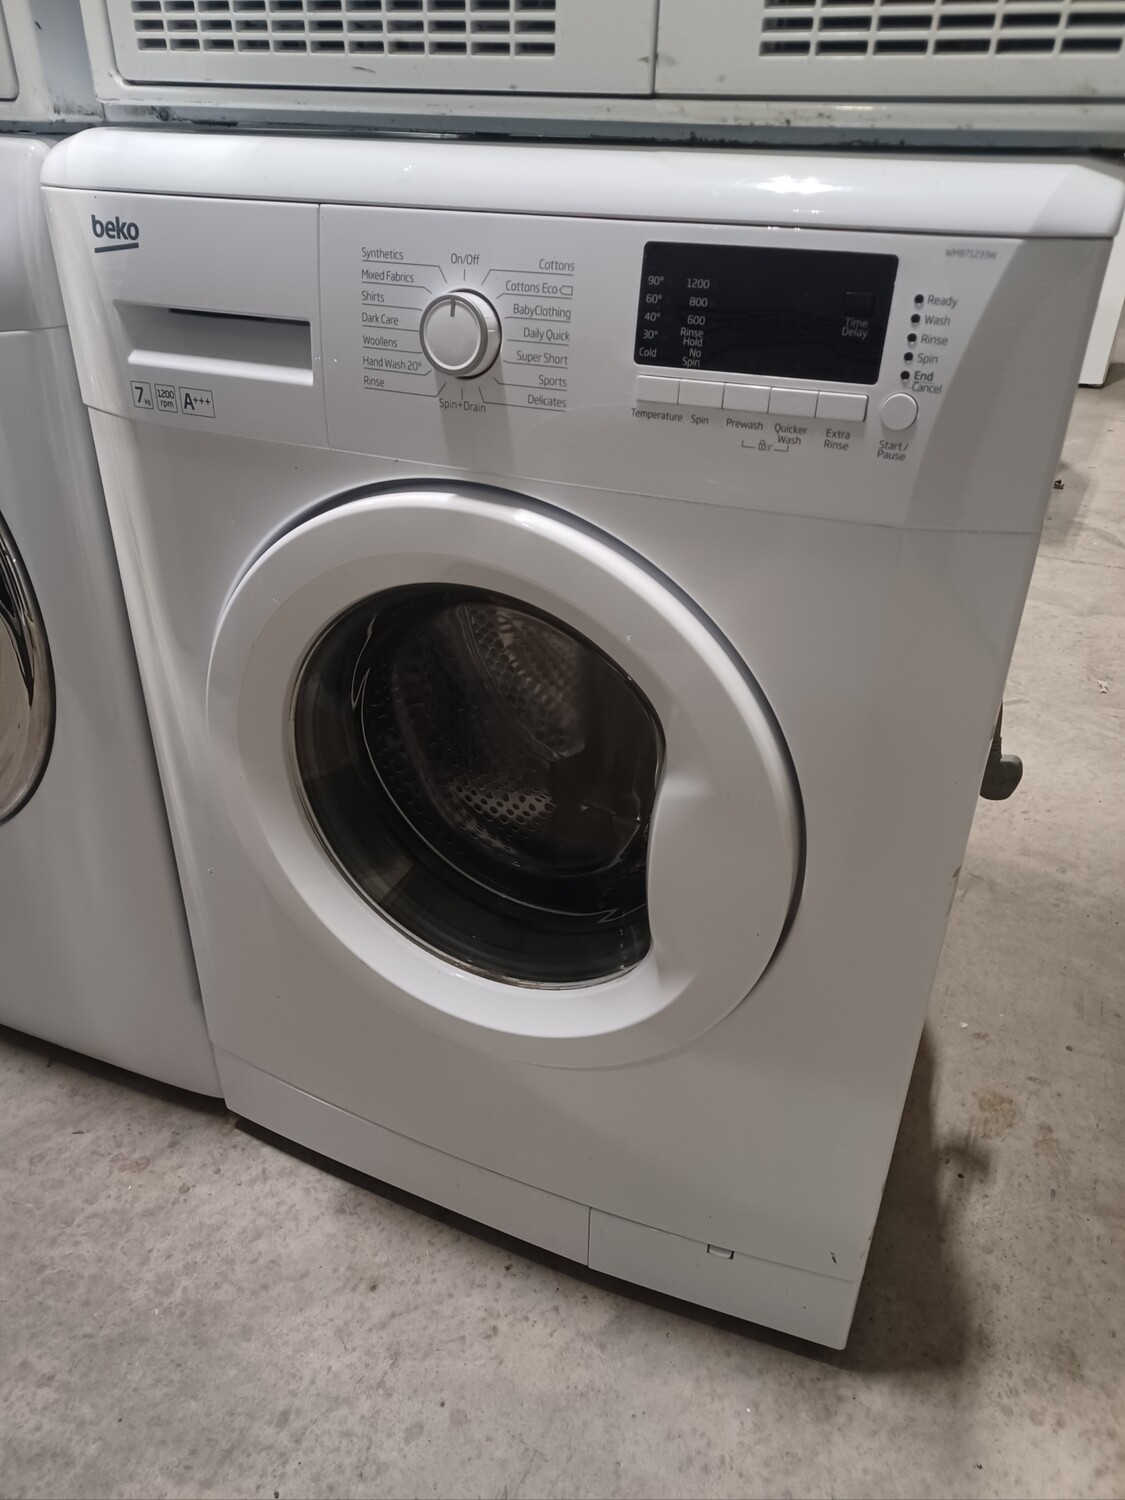 Beko WMB71233W A+++ 7kg Load, 1200 Spin Washing Machine - White - Refurbished - 6 Month Guarantee